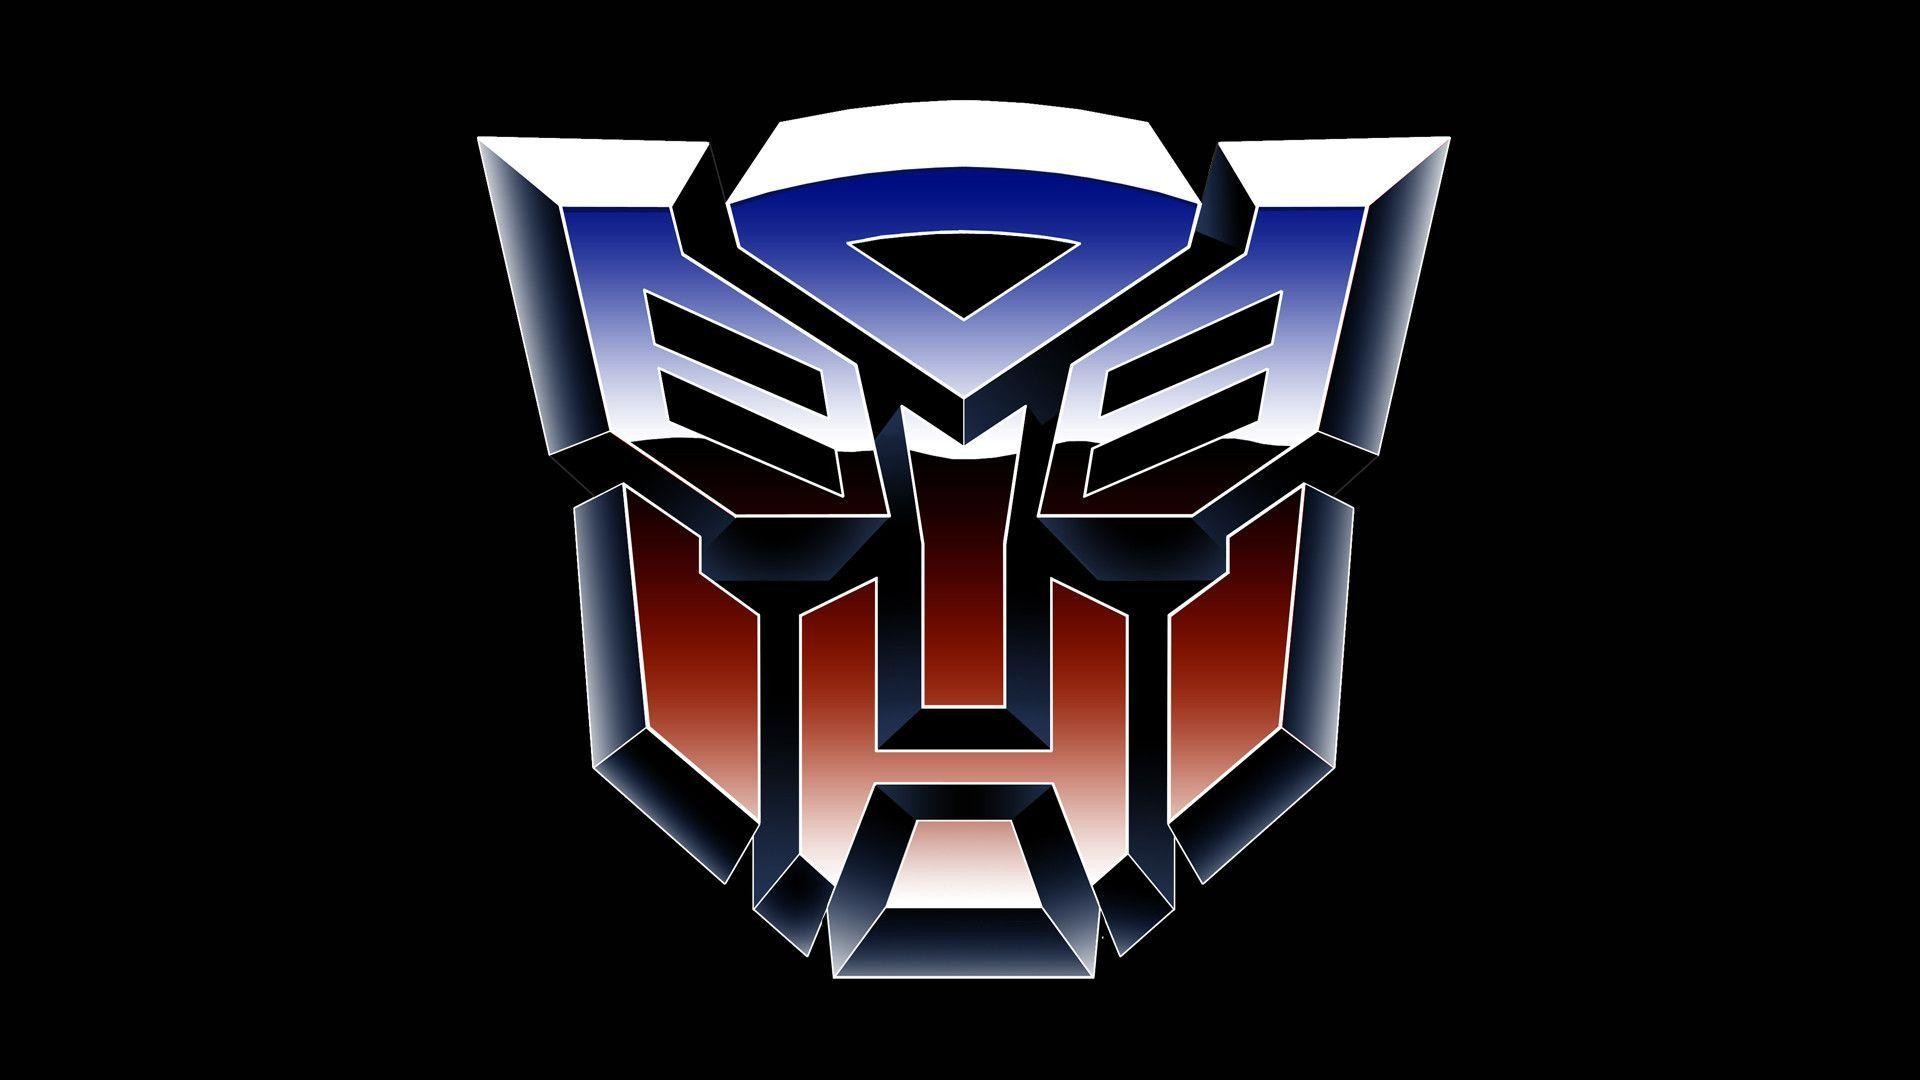 1920x1080 Transformers Autobot Logo Wallpaper 1280x1024 px Free Download .